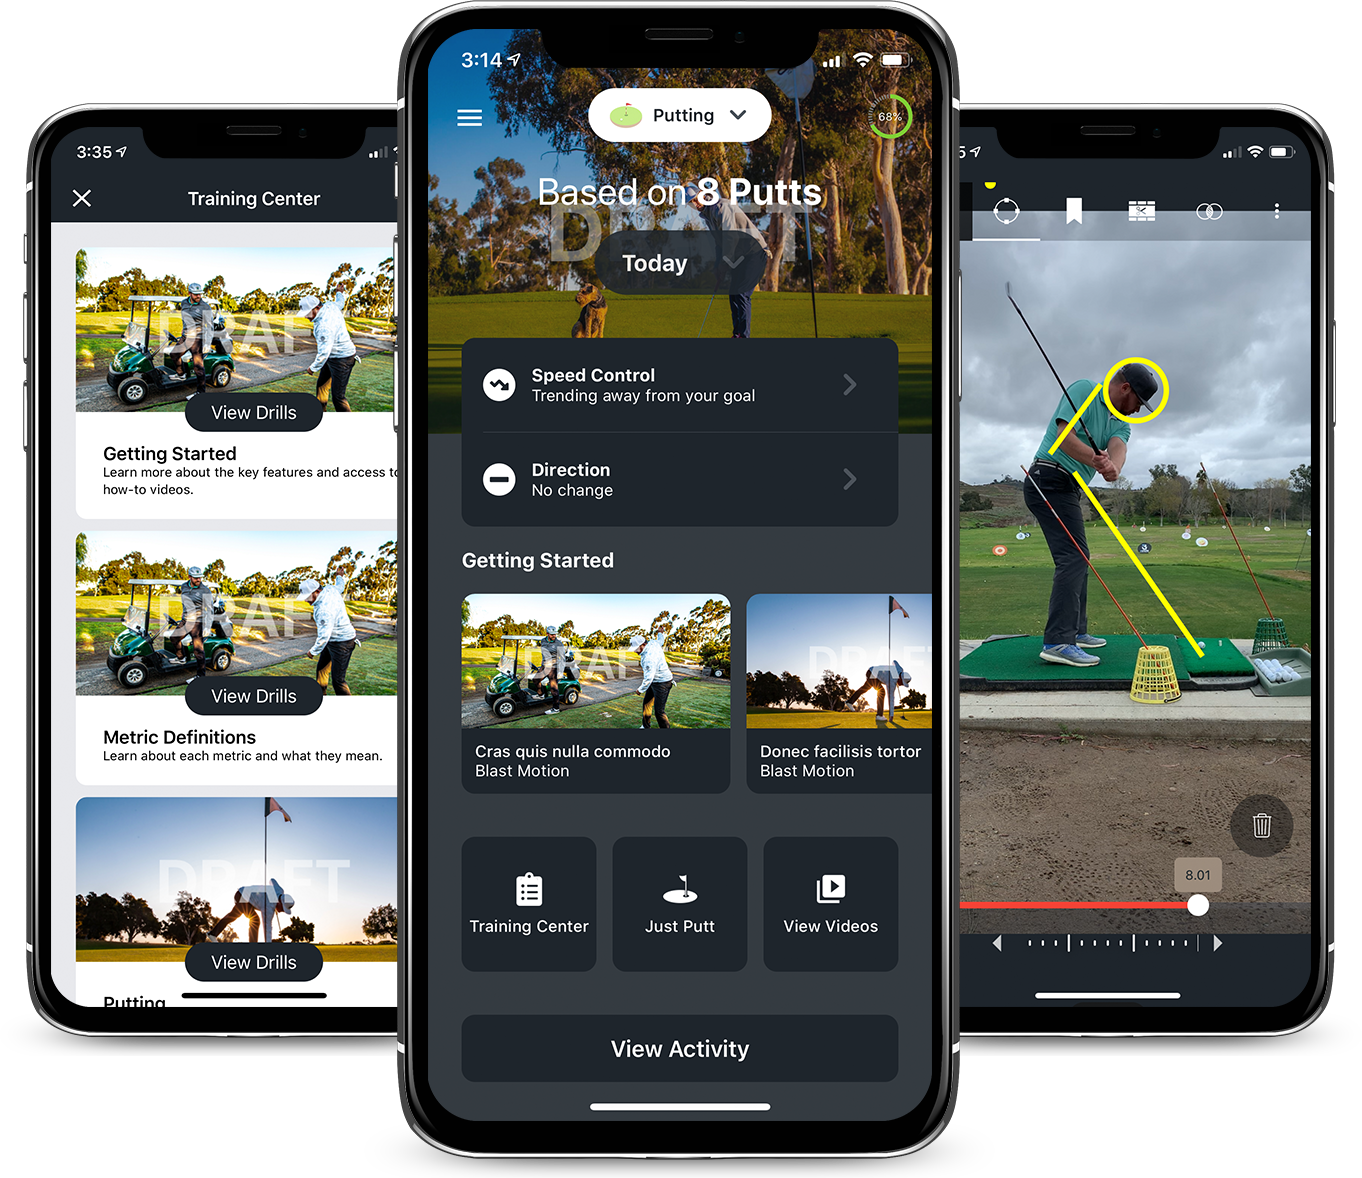 Blast Motion Golf App metrics to improve putting and short game